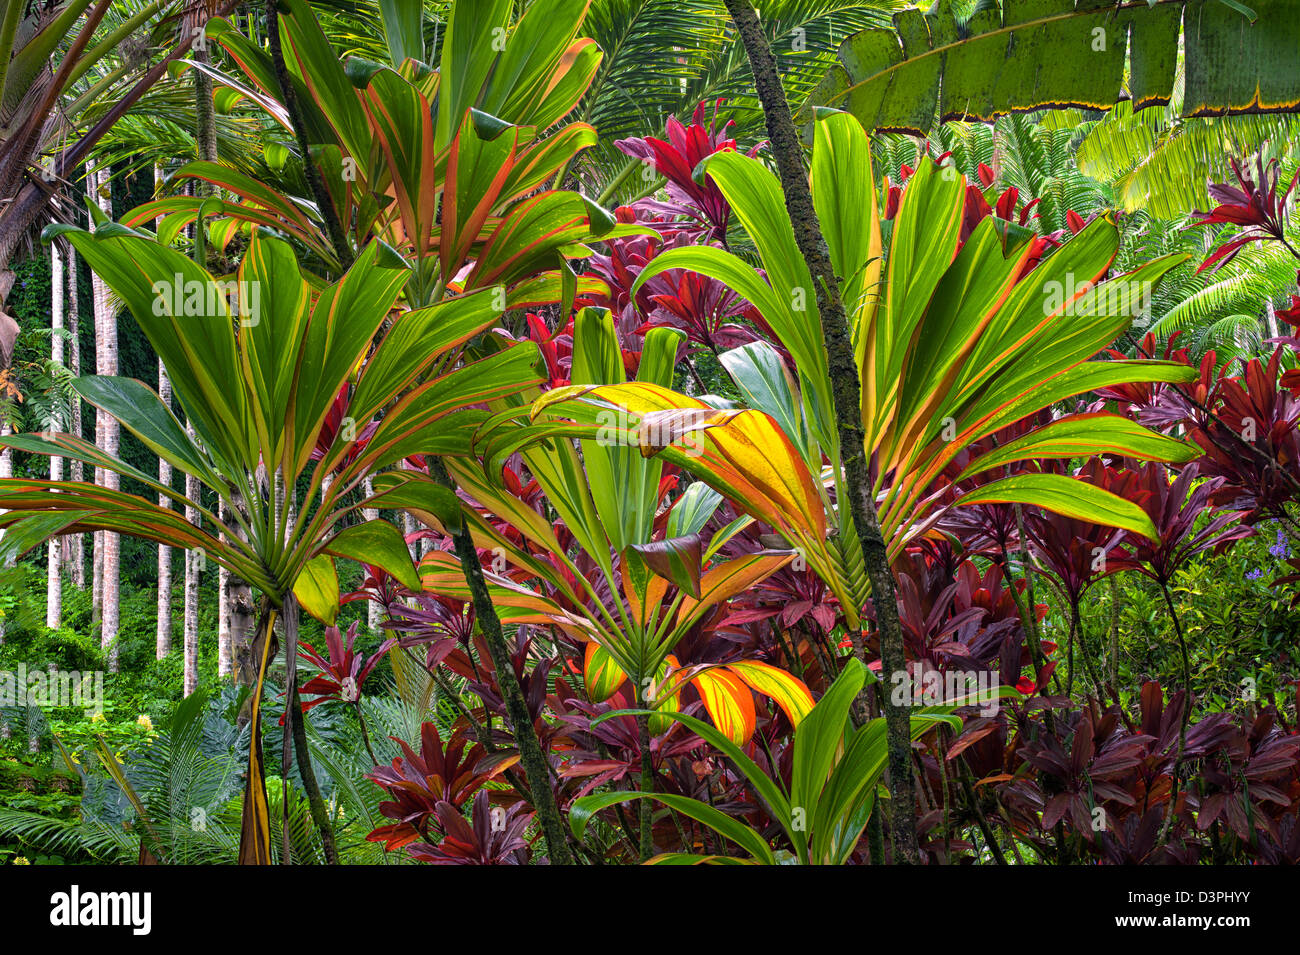 Ti les plantes. Hawaii Tropical Botanical Gardens. New York, la grande île. Banque D'Images